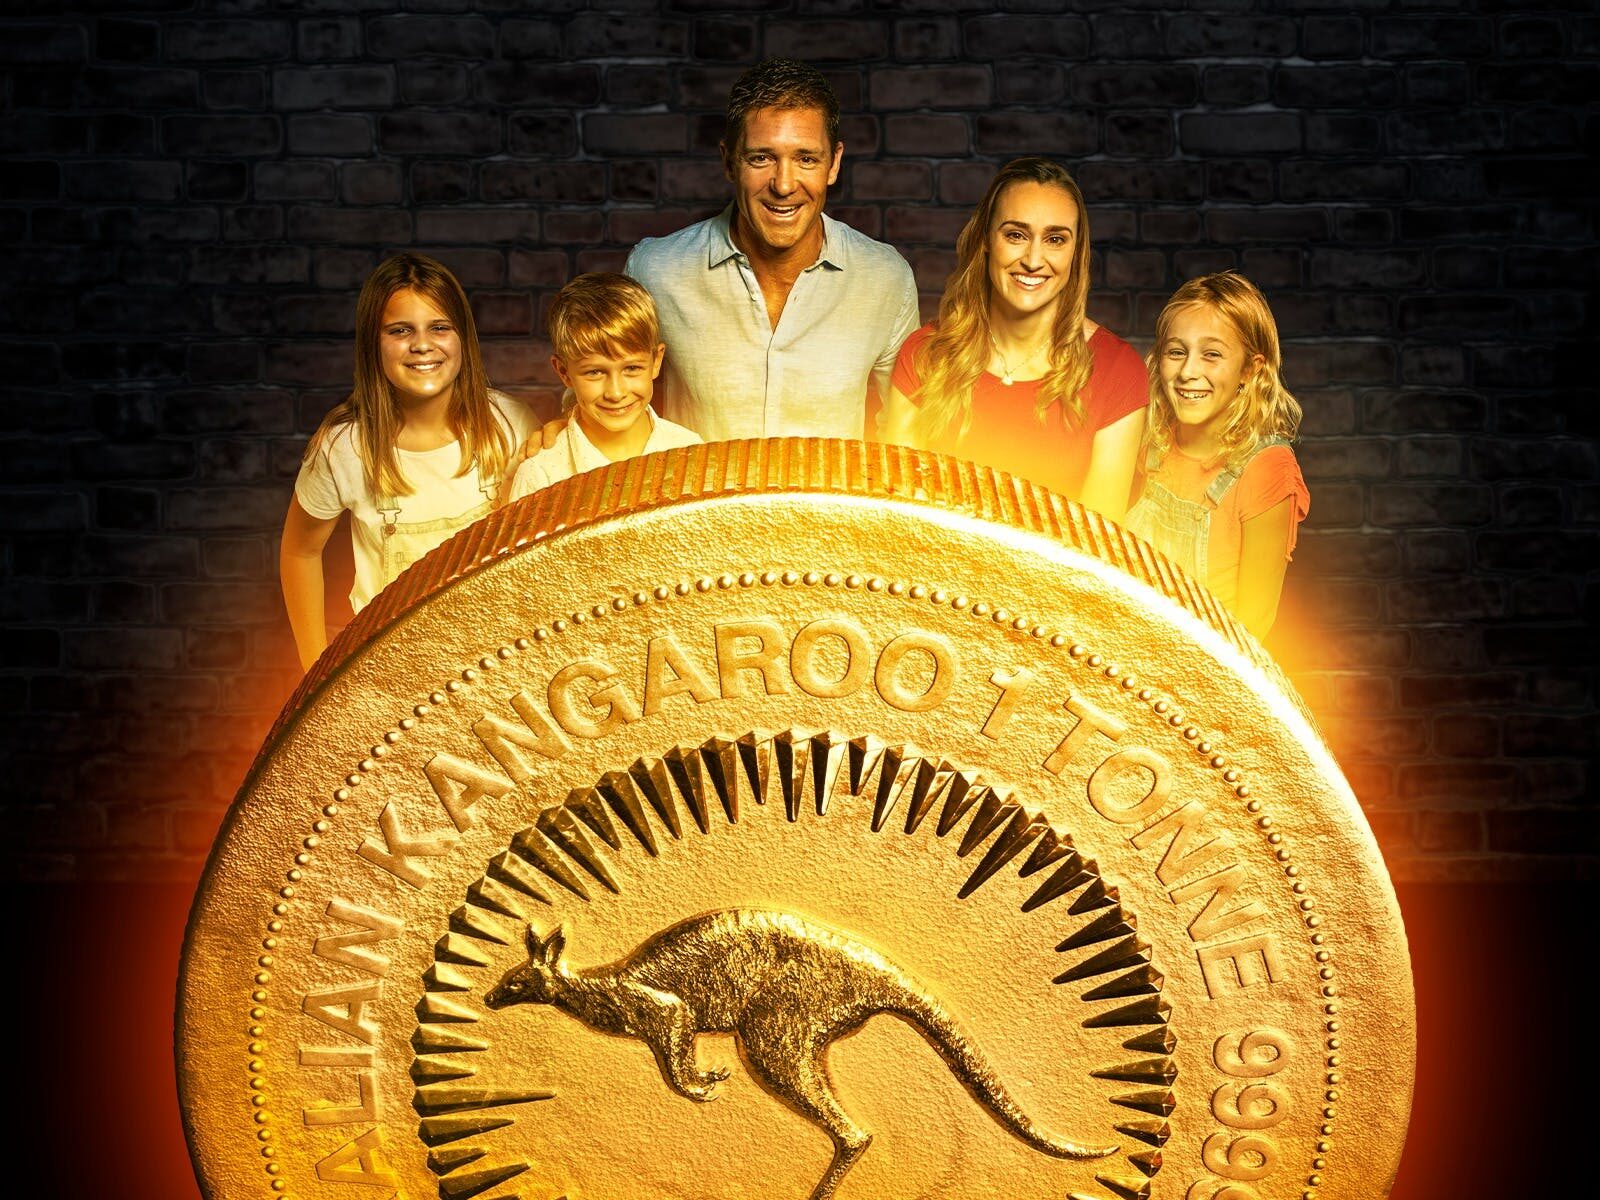 The Perth Mint, East Perth, Western Australia